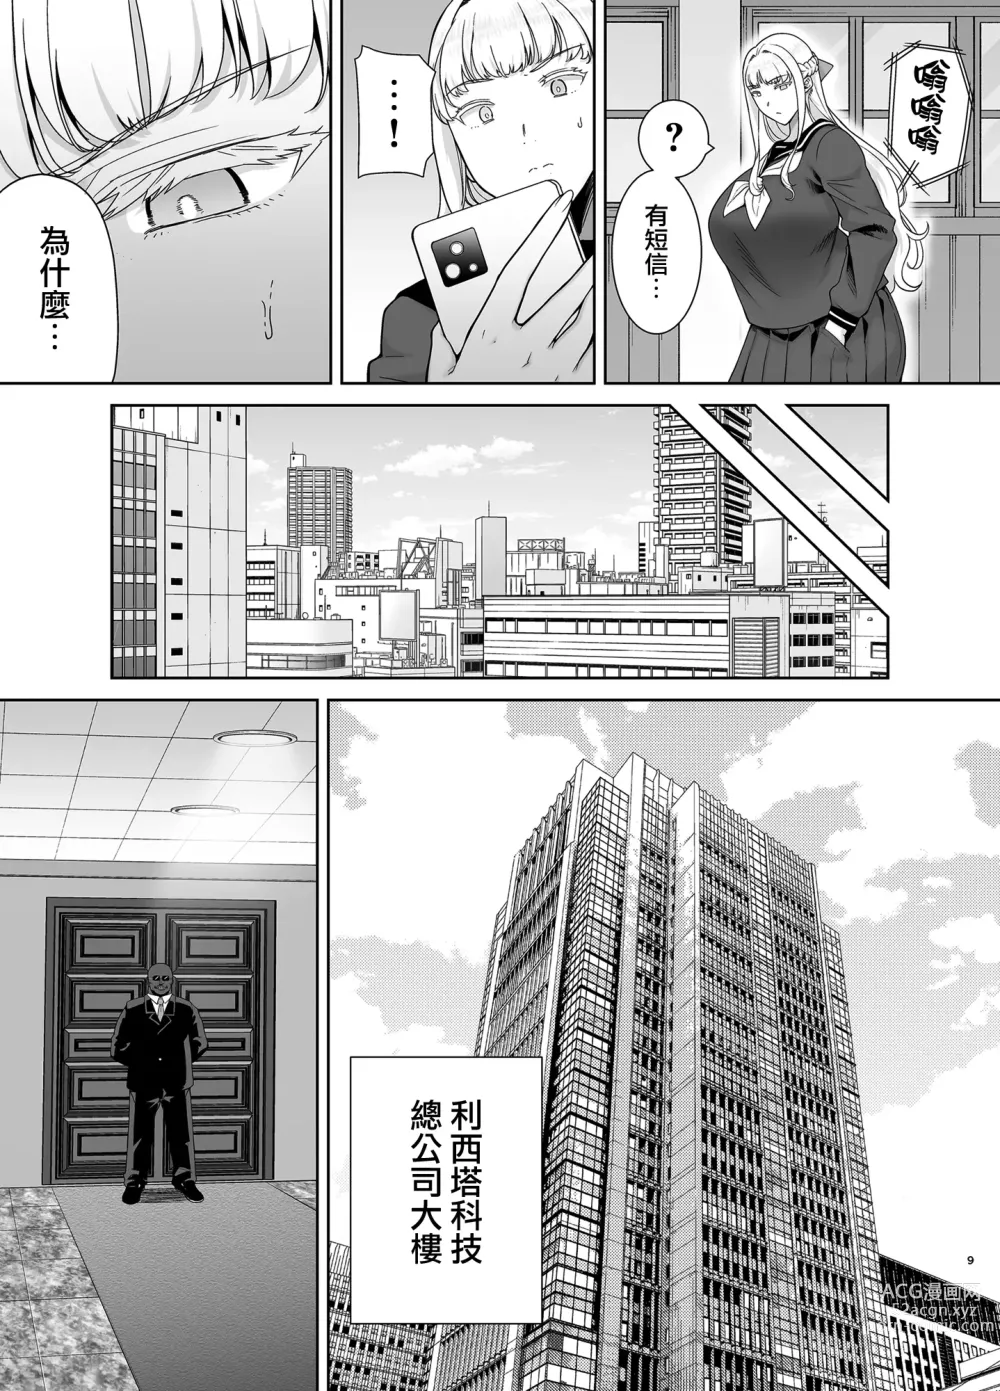 Page 9 of doujinshi 聖華女学院公認竿おじさん7